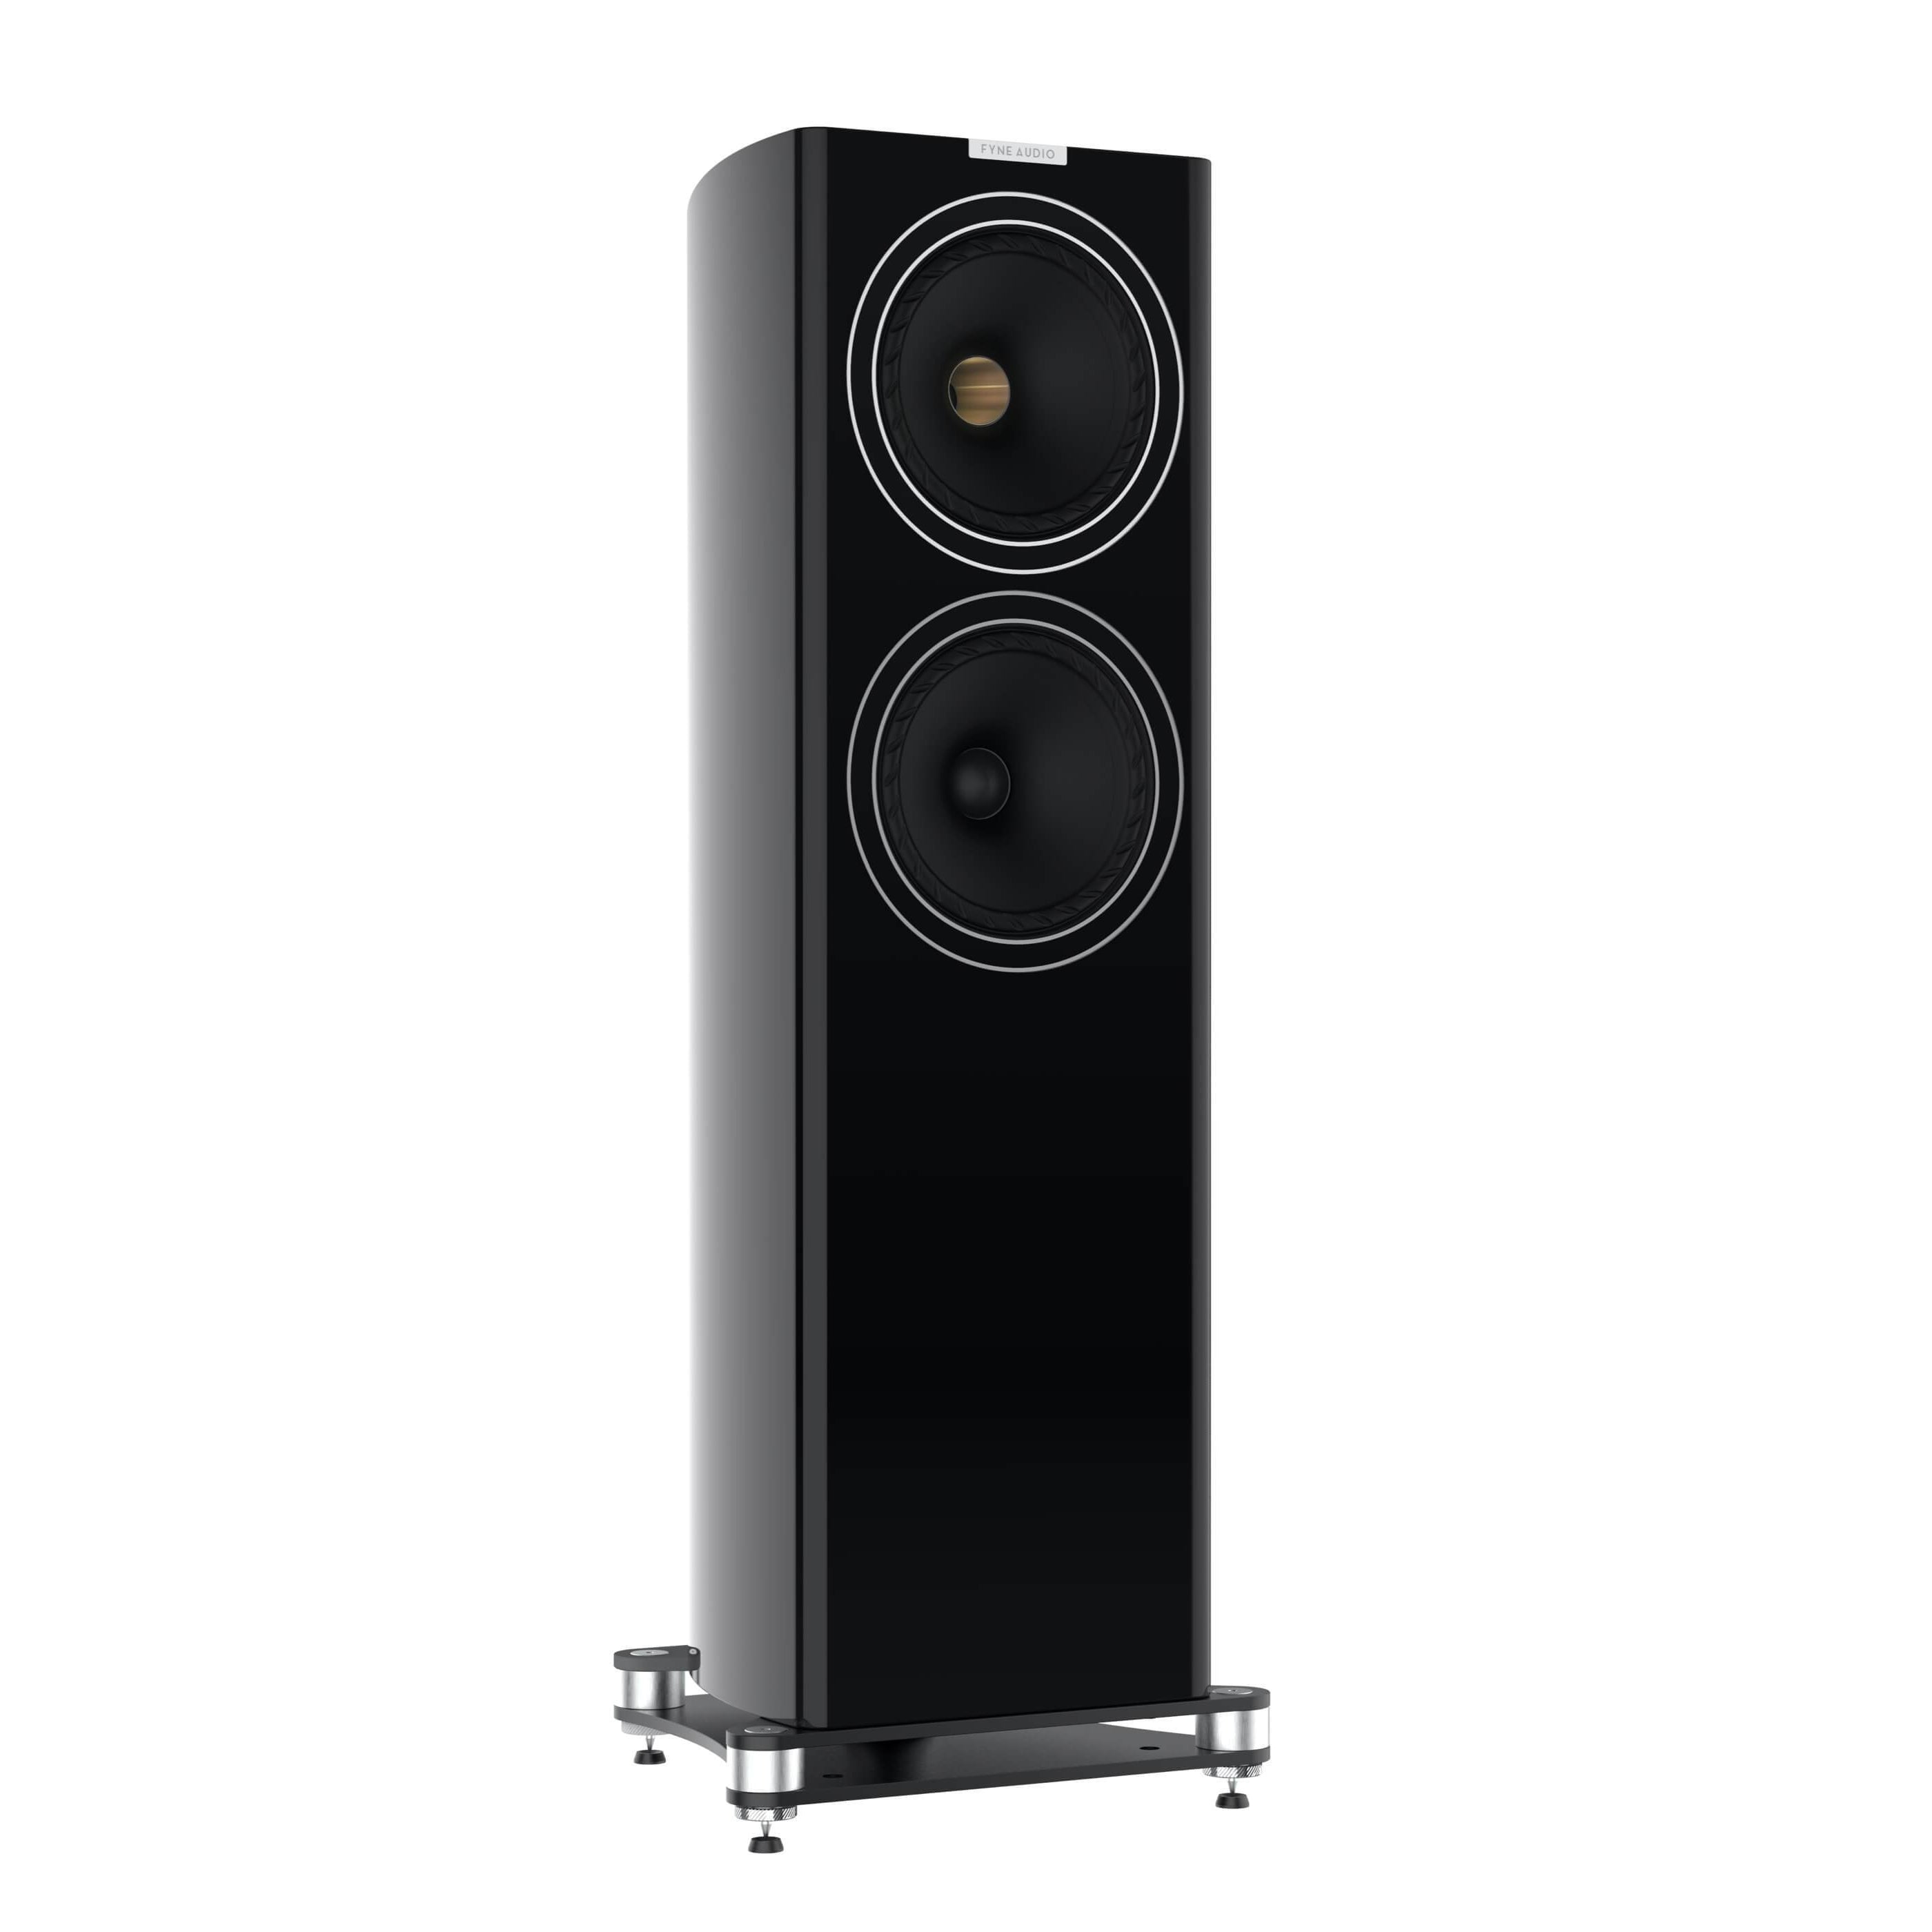 Fyne Audio - F703 - Floorstanding Speakers